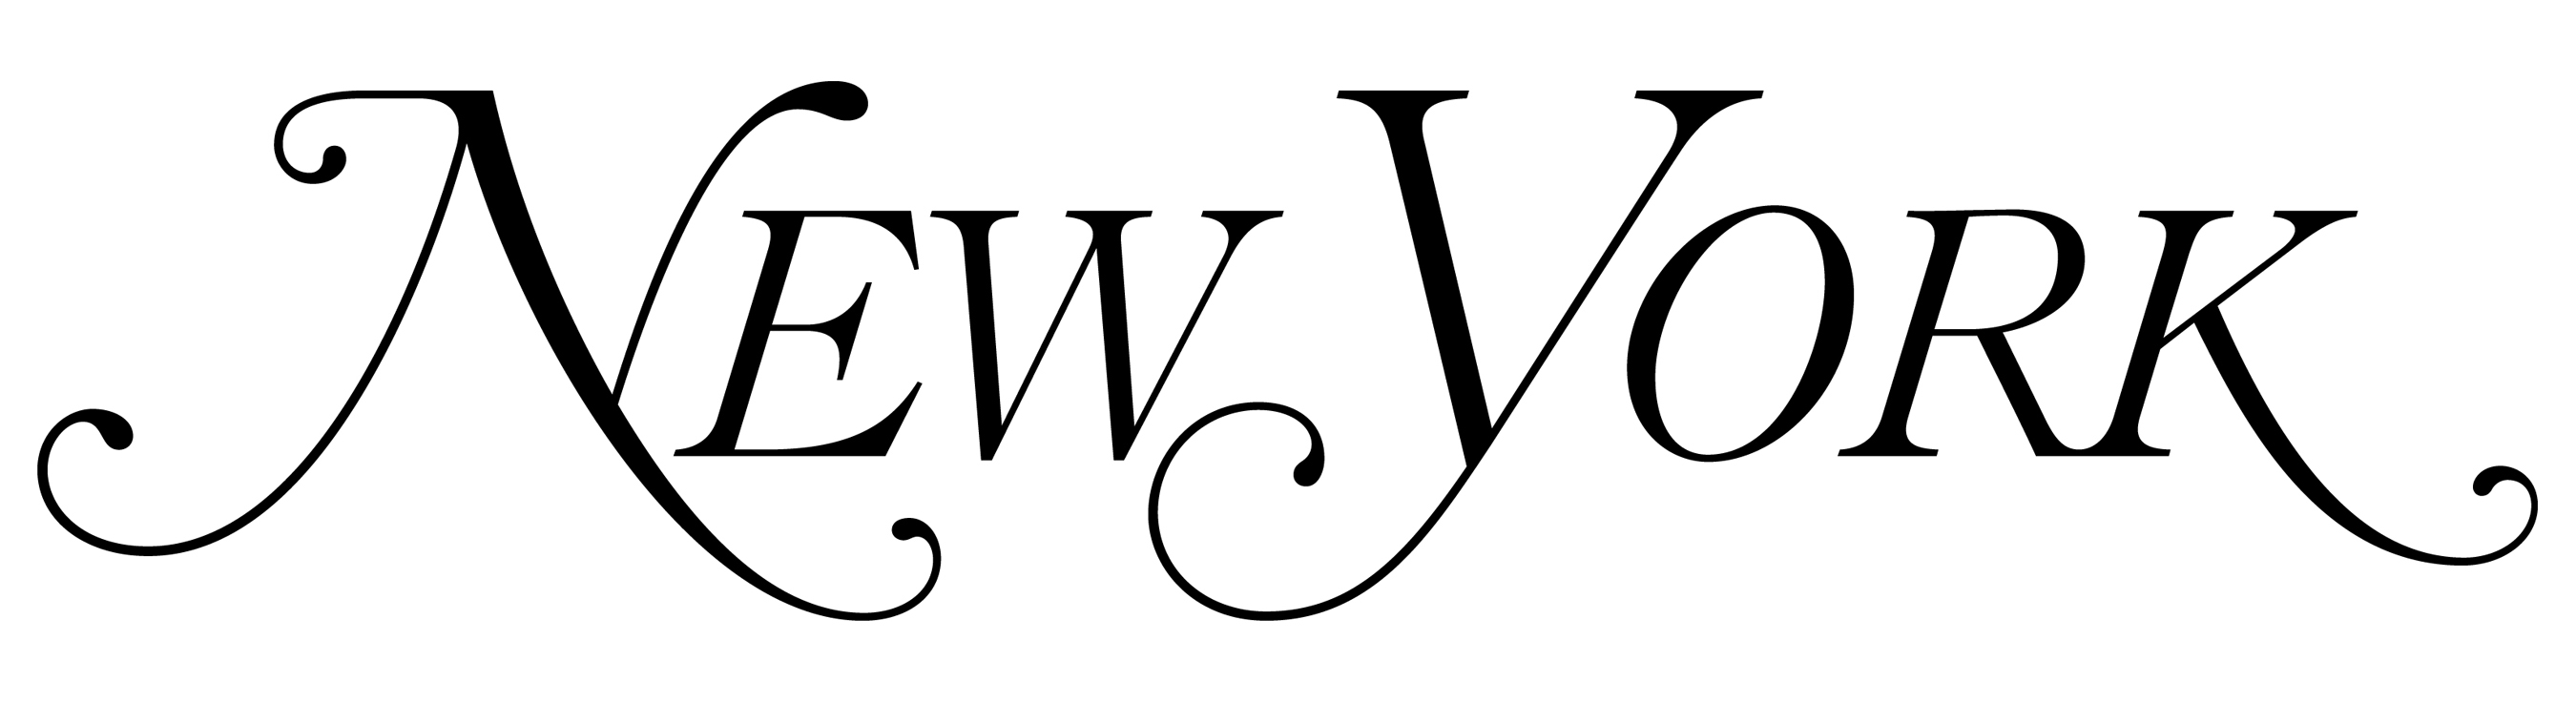 New York Magazine Logo photo - 1